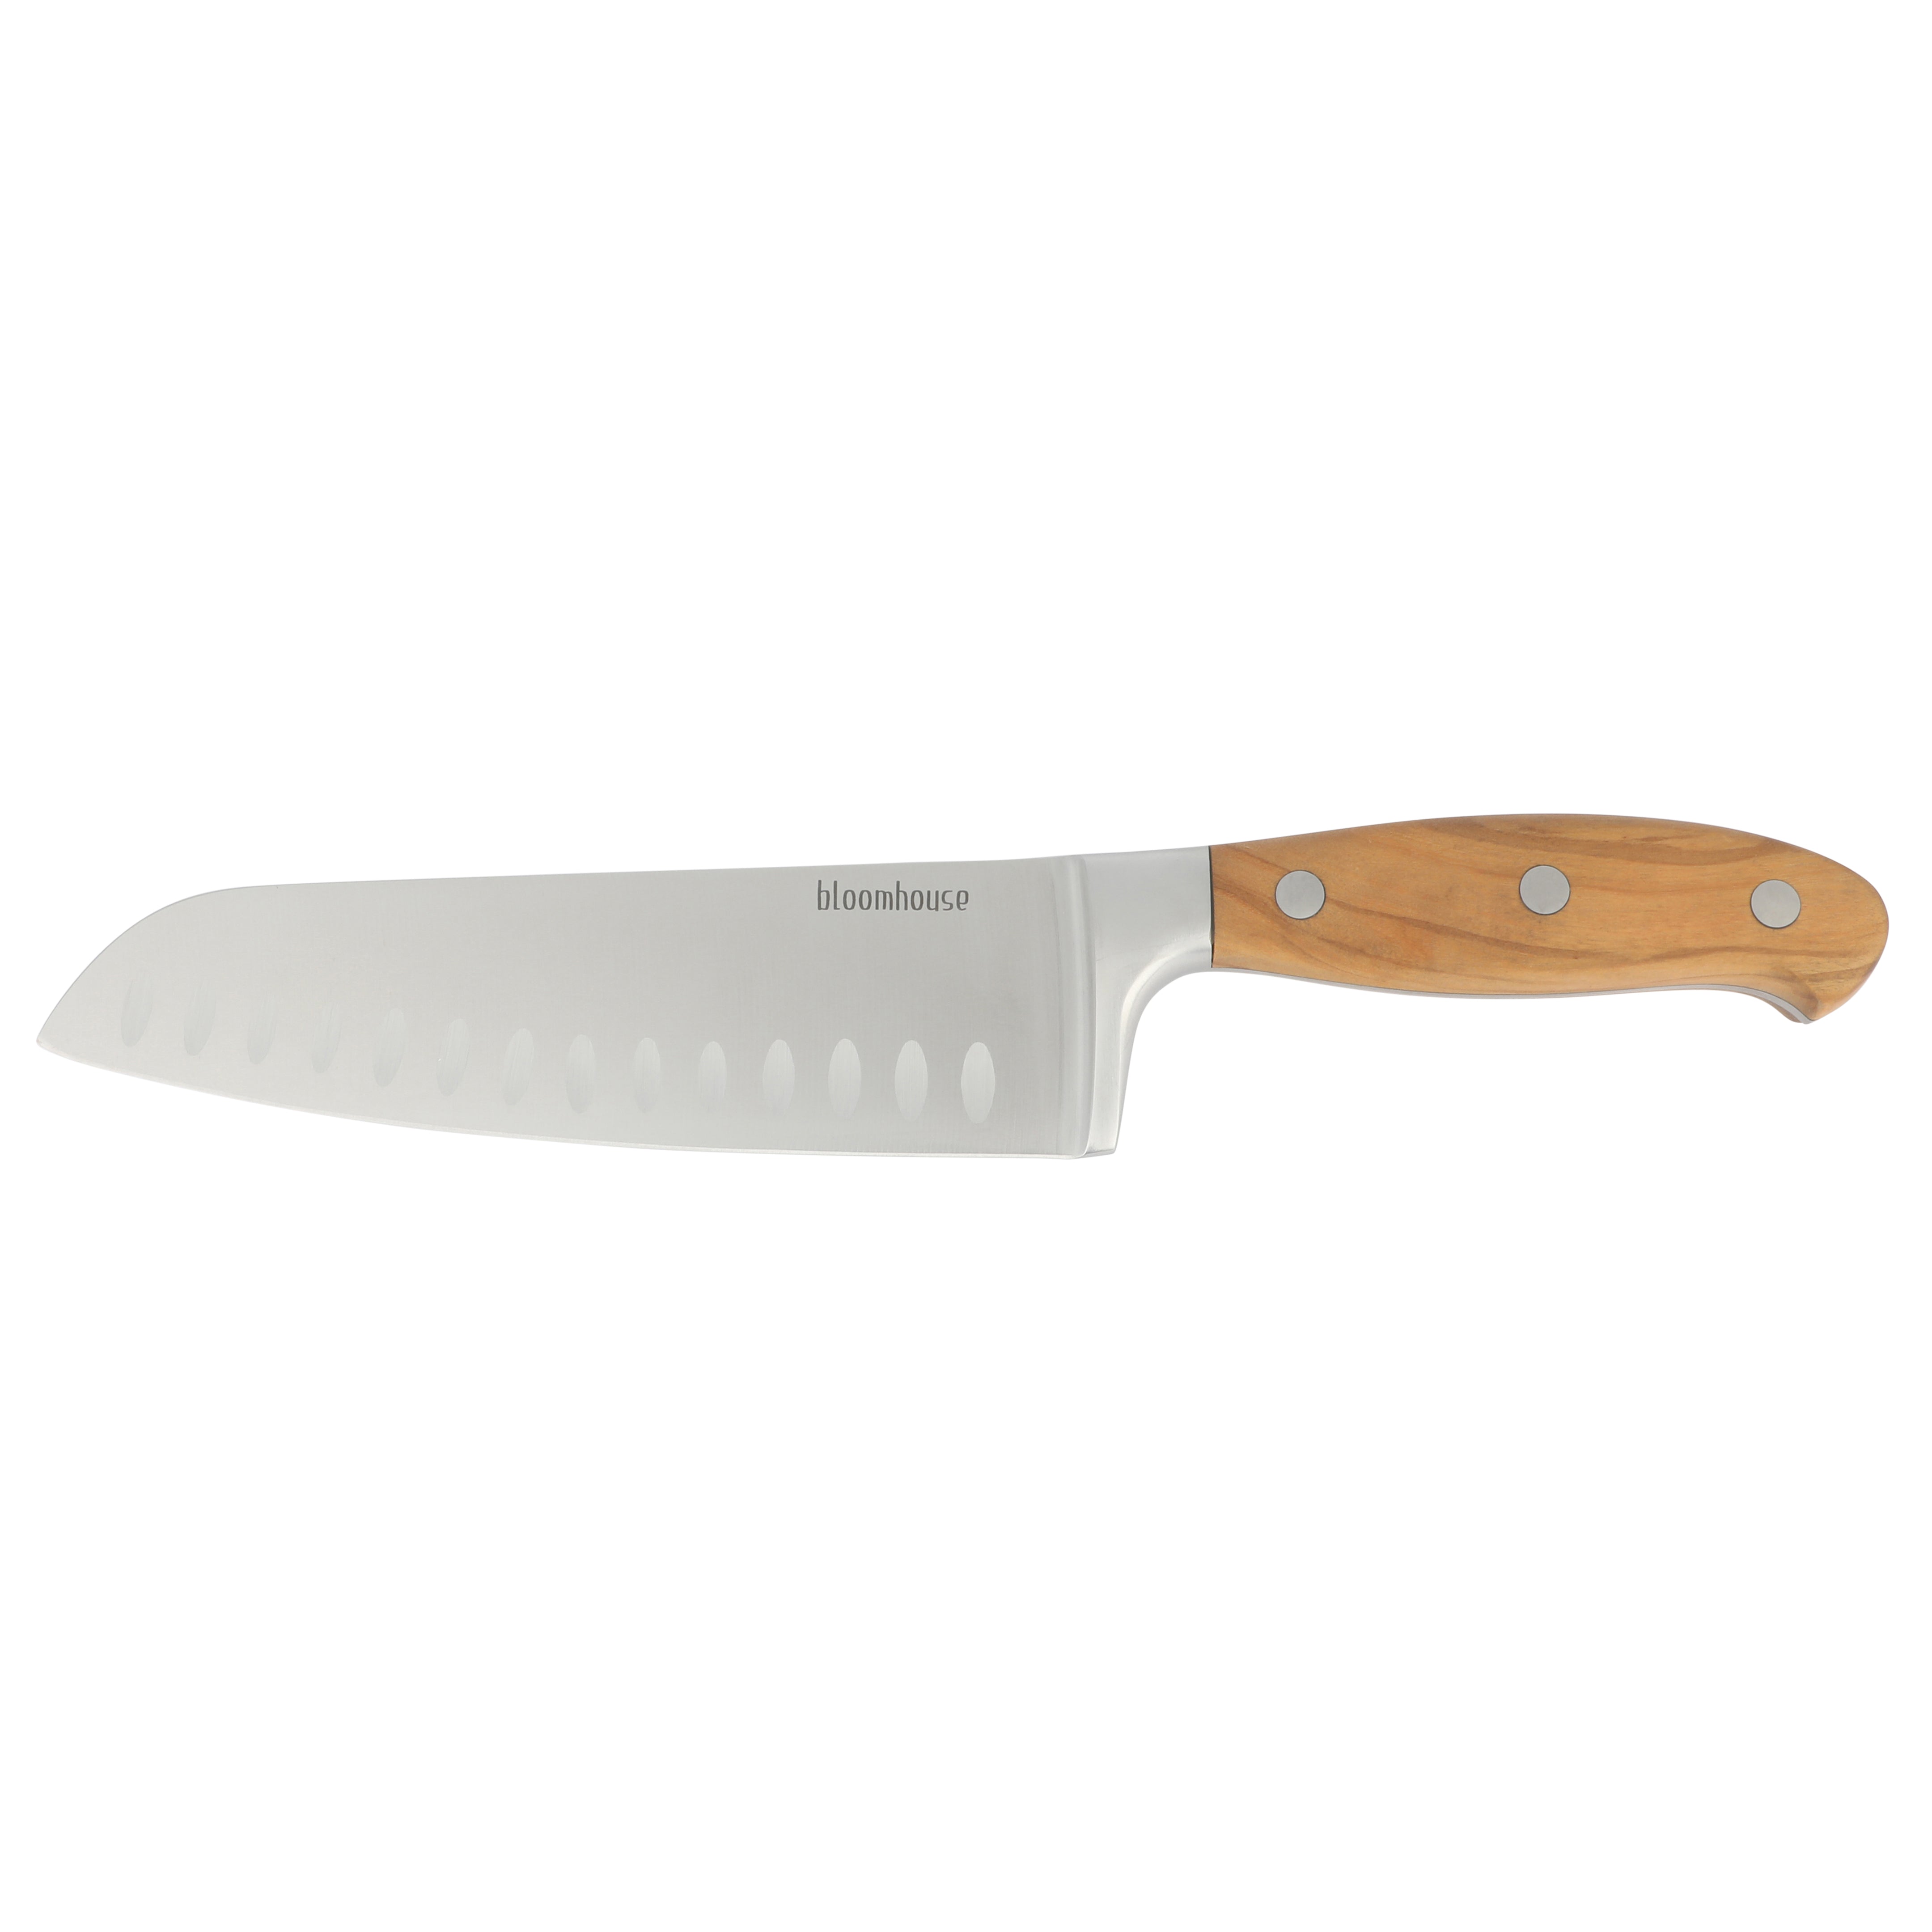 Bloomhouse 7 Inch German Steel Santoku Knife w/ Olive Wood Forged Handle